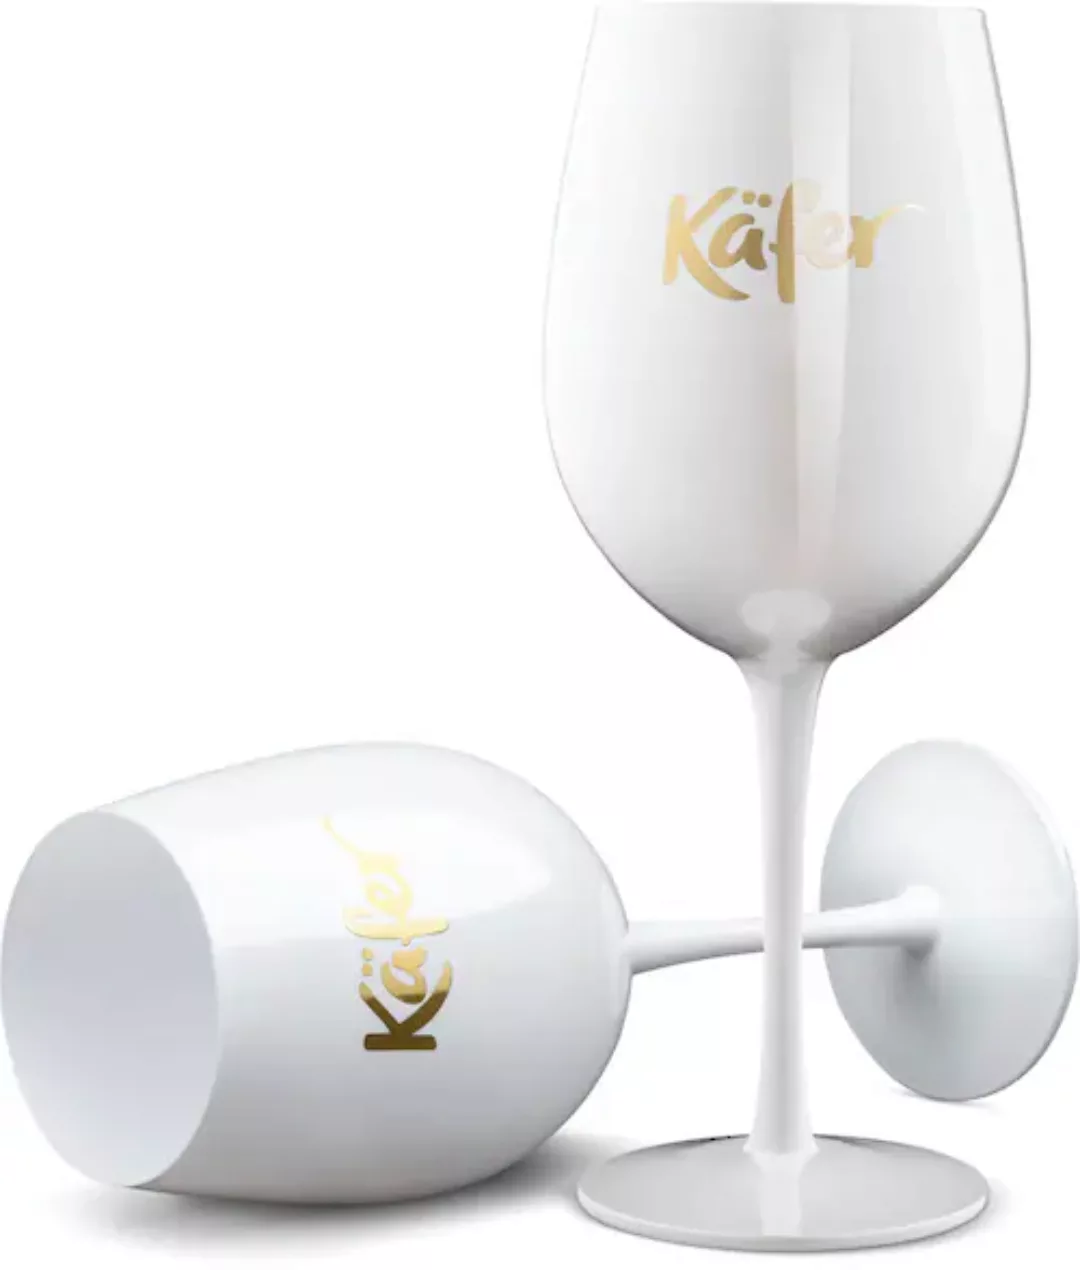 Käfer Cocktailglas, (Set, 2 tlg., 2 Gläser) günstig online kaufen